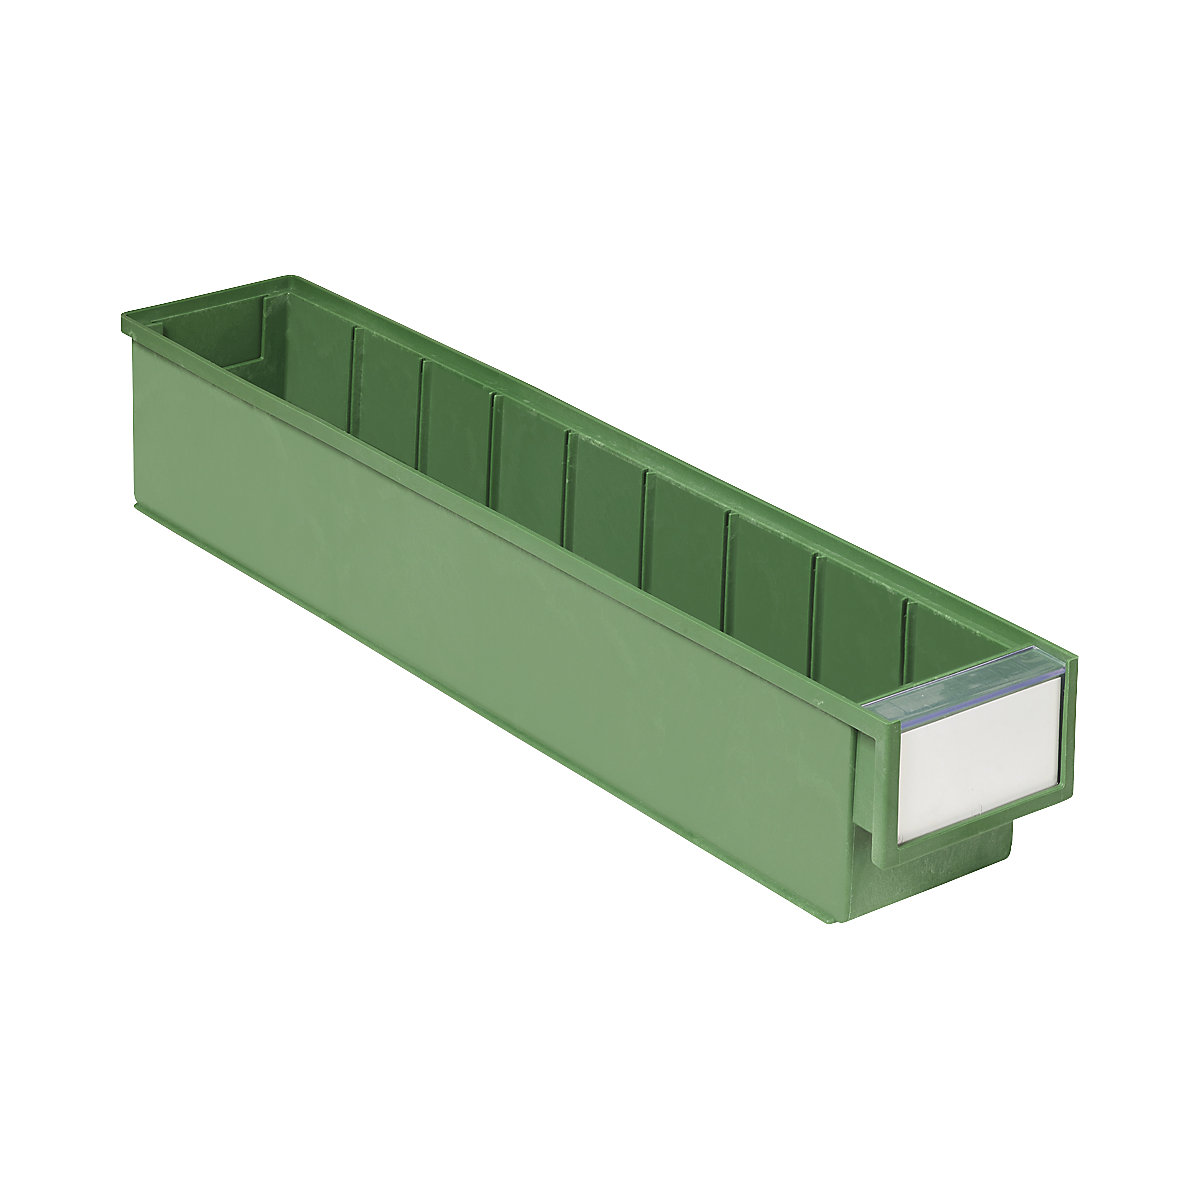 Caixa para estante BiOX – Treston, verde, CxLxA 500 x 90 x 82 mm, embalagem de 30 unid.-4